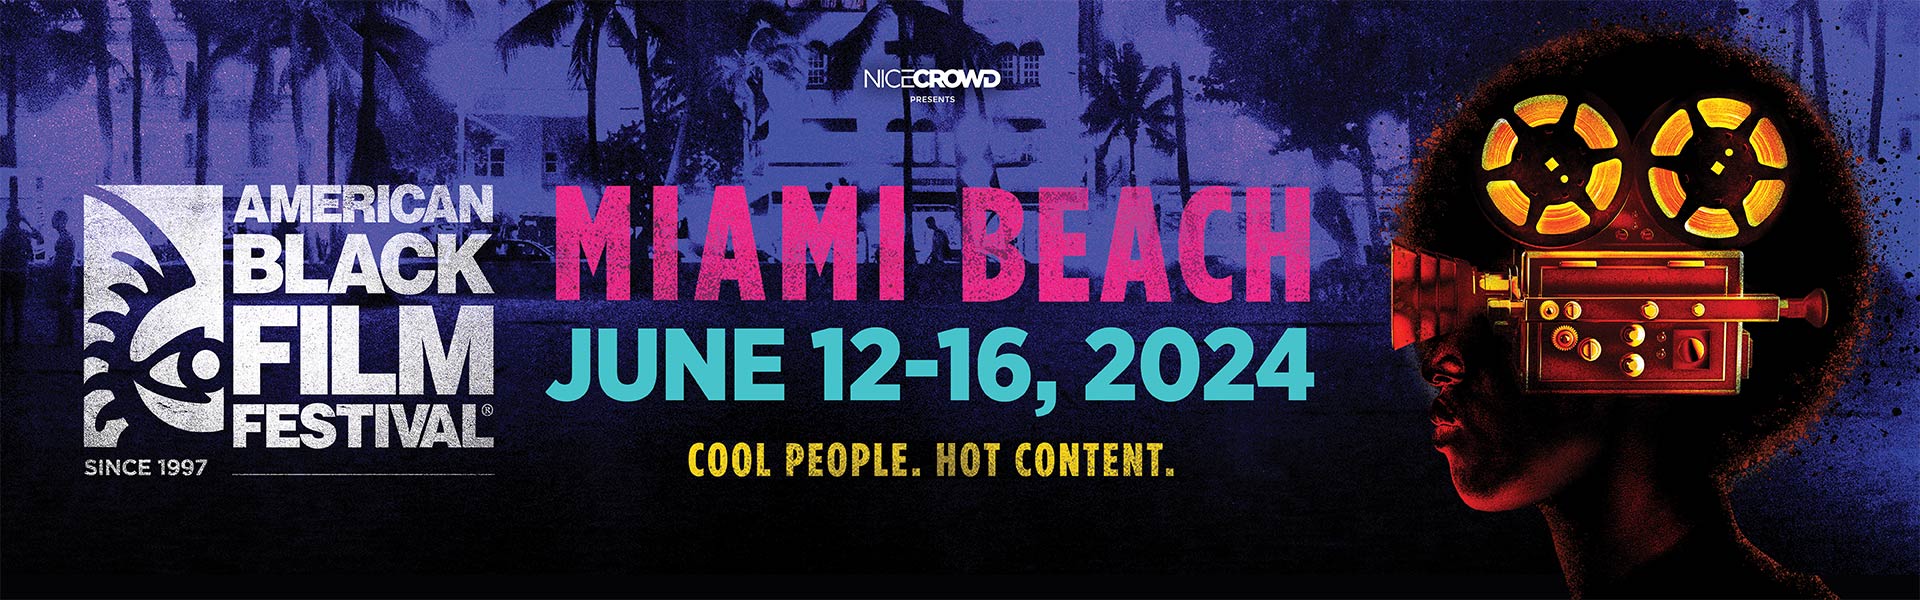 NICE CROWD presents - American Black Film Festival MIAMI BEACH - June 12-16, 2024 - Cool People. Hot Content.